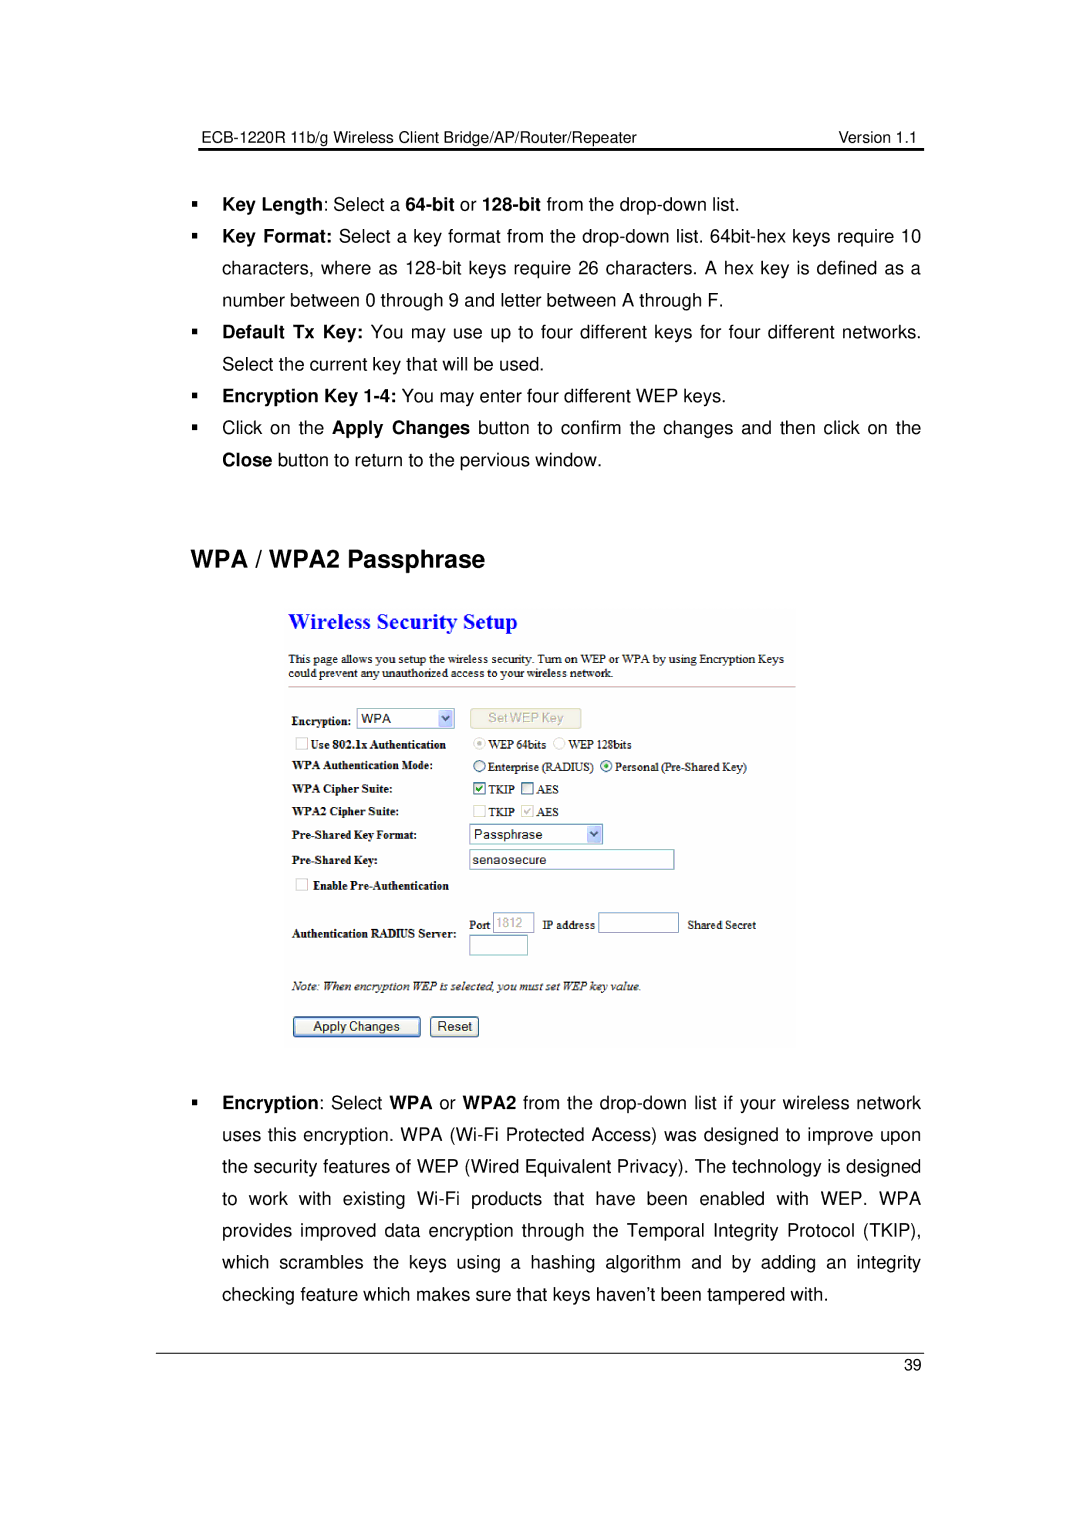 EnGenius Technologies ECB-1220R user manual WPA / WPA2 Passphrase 